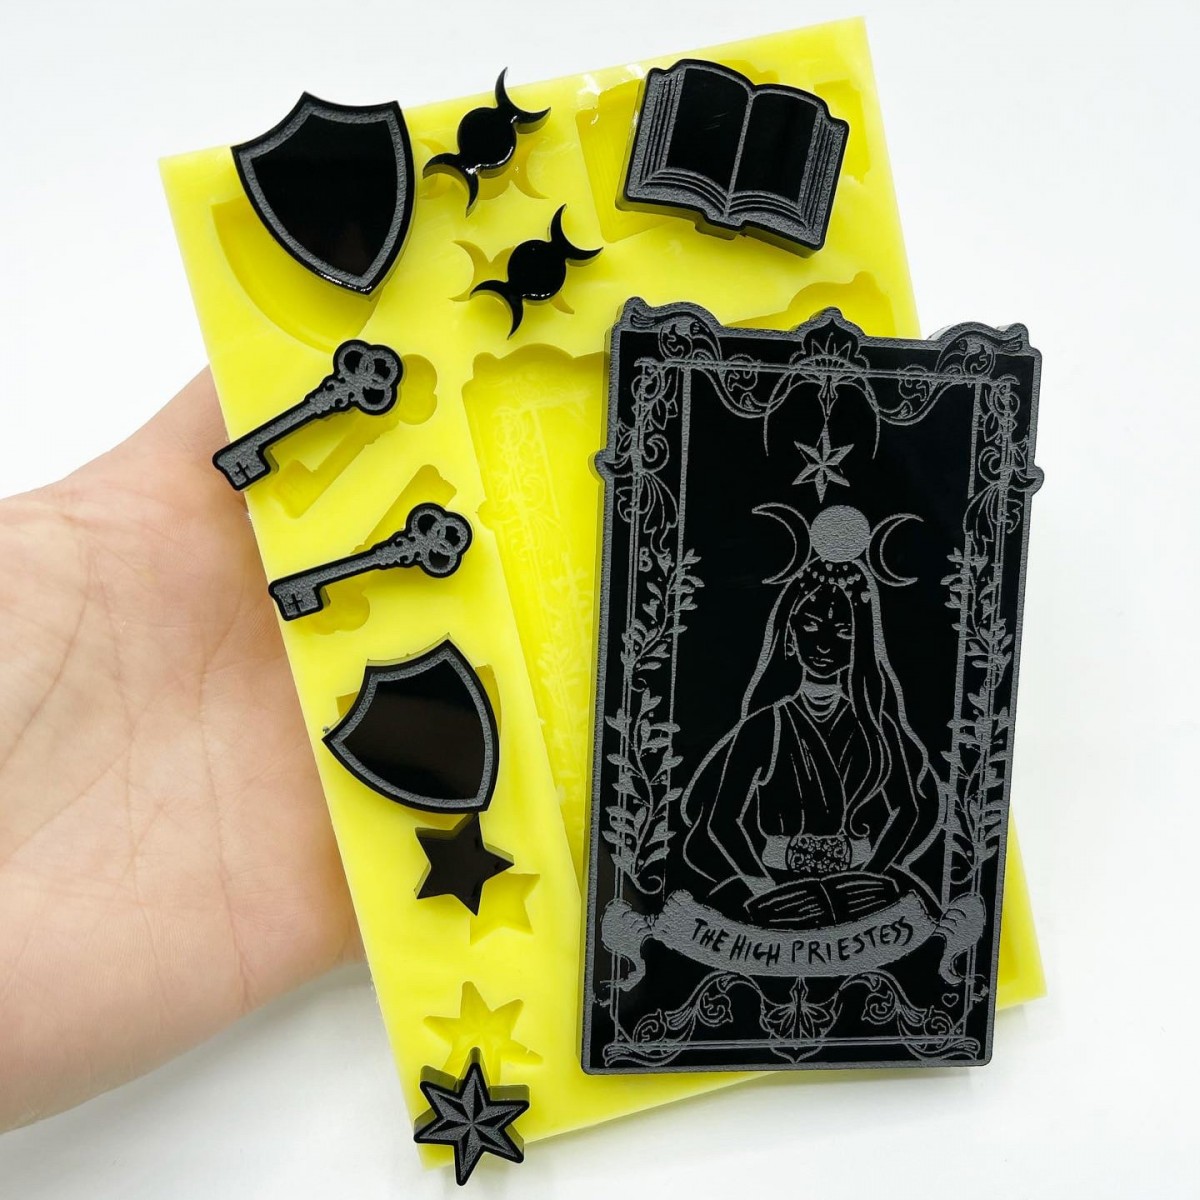 "The High Priestess" Tarot Card plus 9 shapes